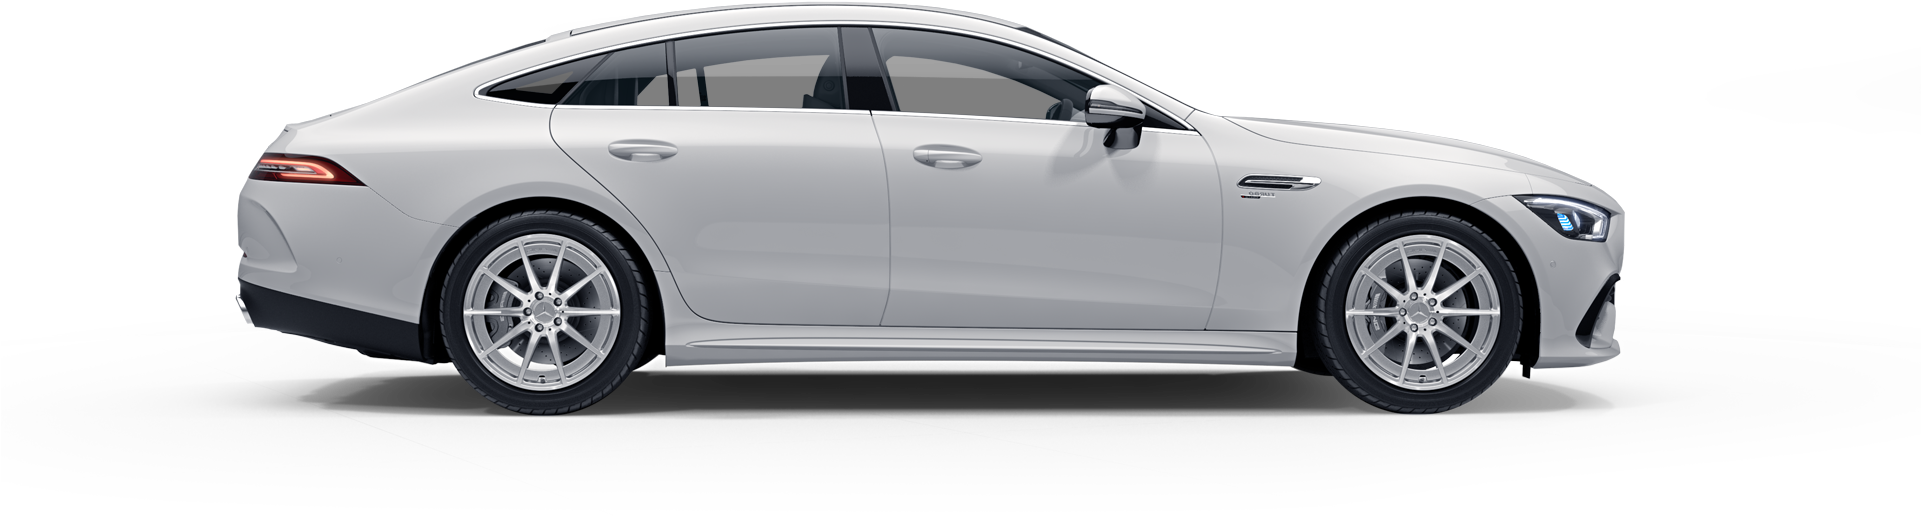 Silver Luxury Sedan Profile View PNG